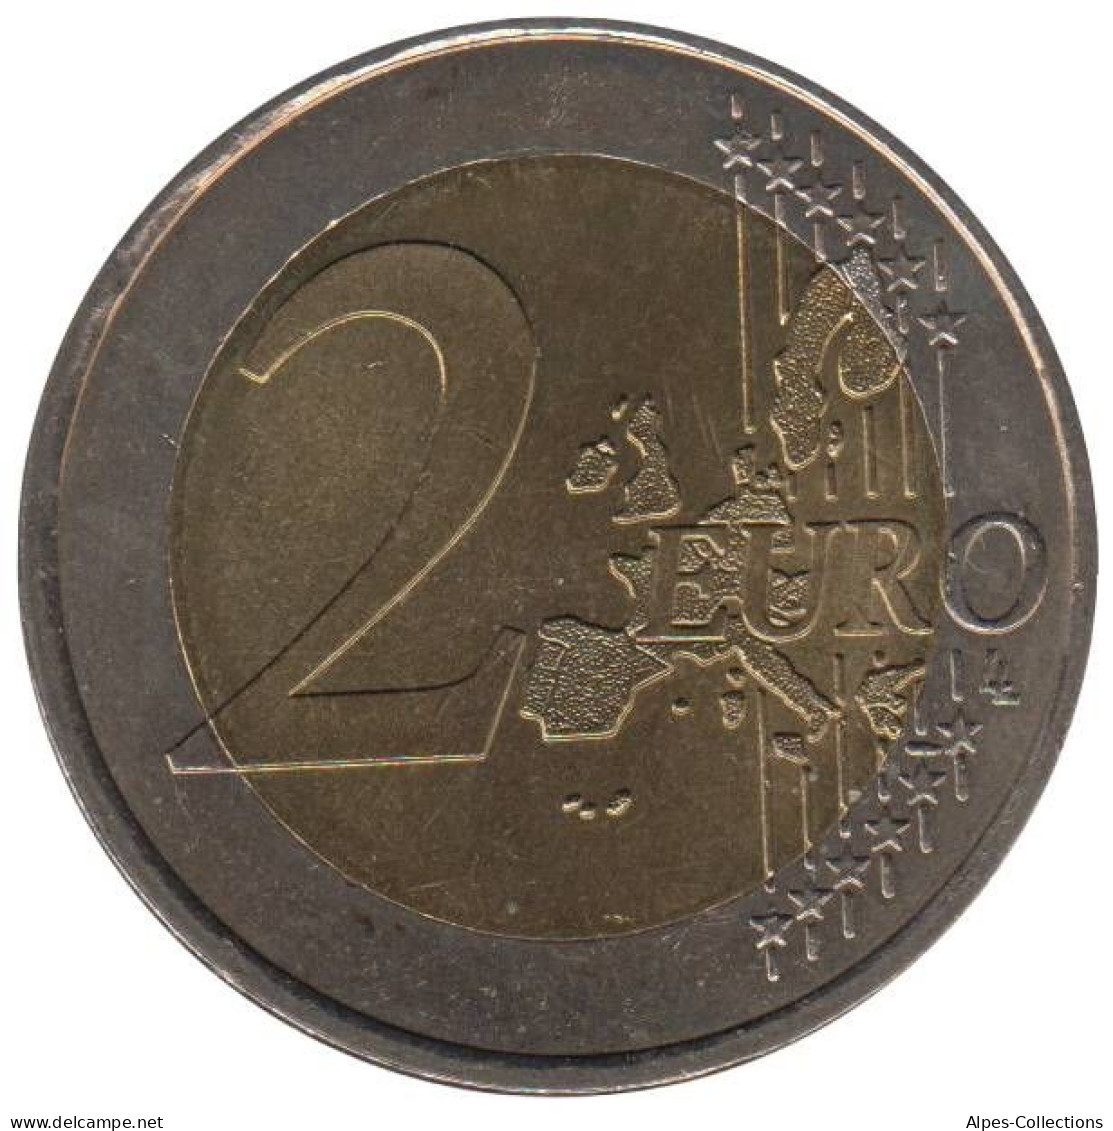 FR20000.1 - FRANCE - 2 Euros - 2000 - France